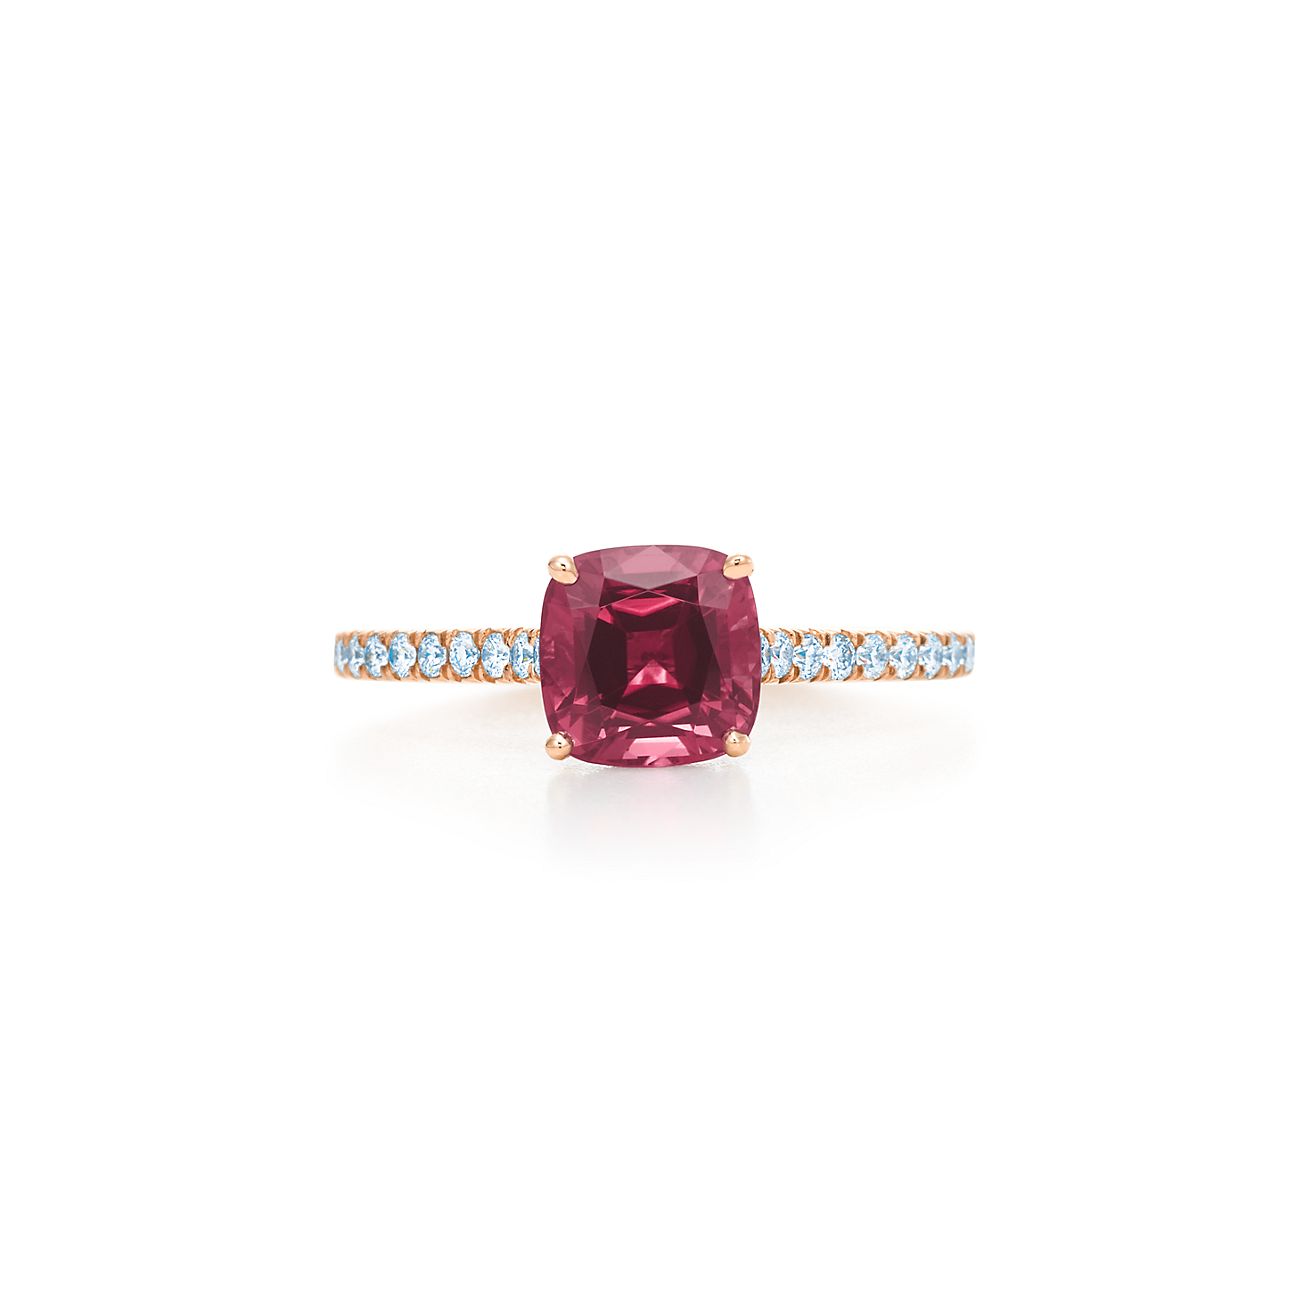 Pink Tourmaline Ring in Sterling Silver, Size 6.5 US – Kathy Bankston